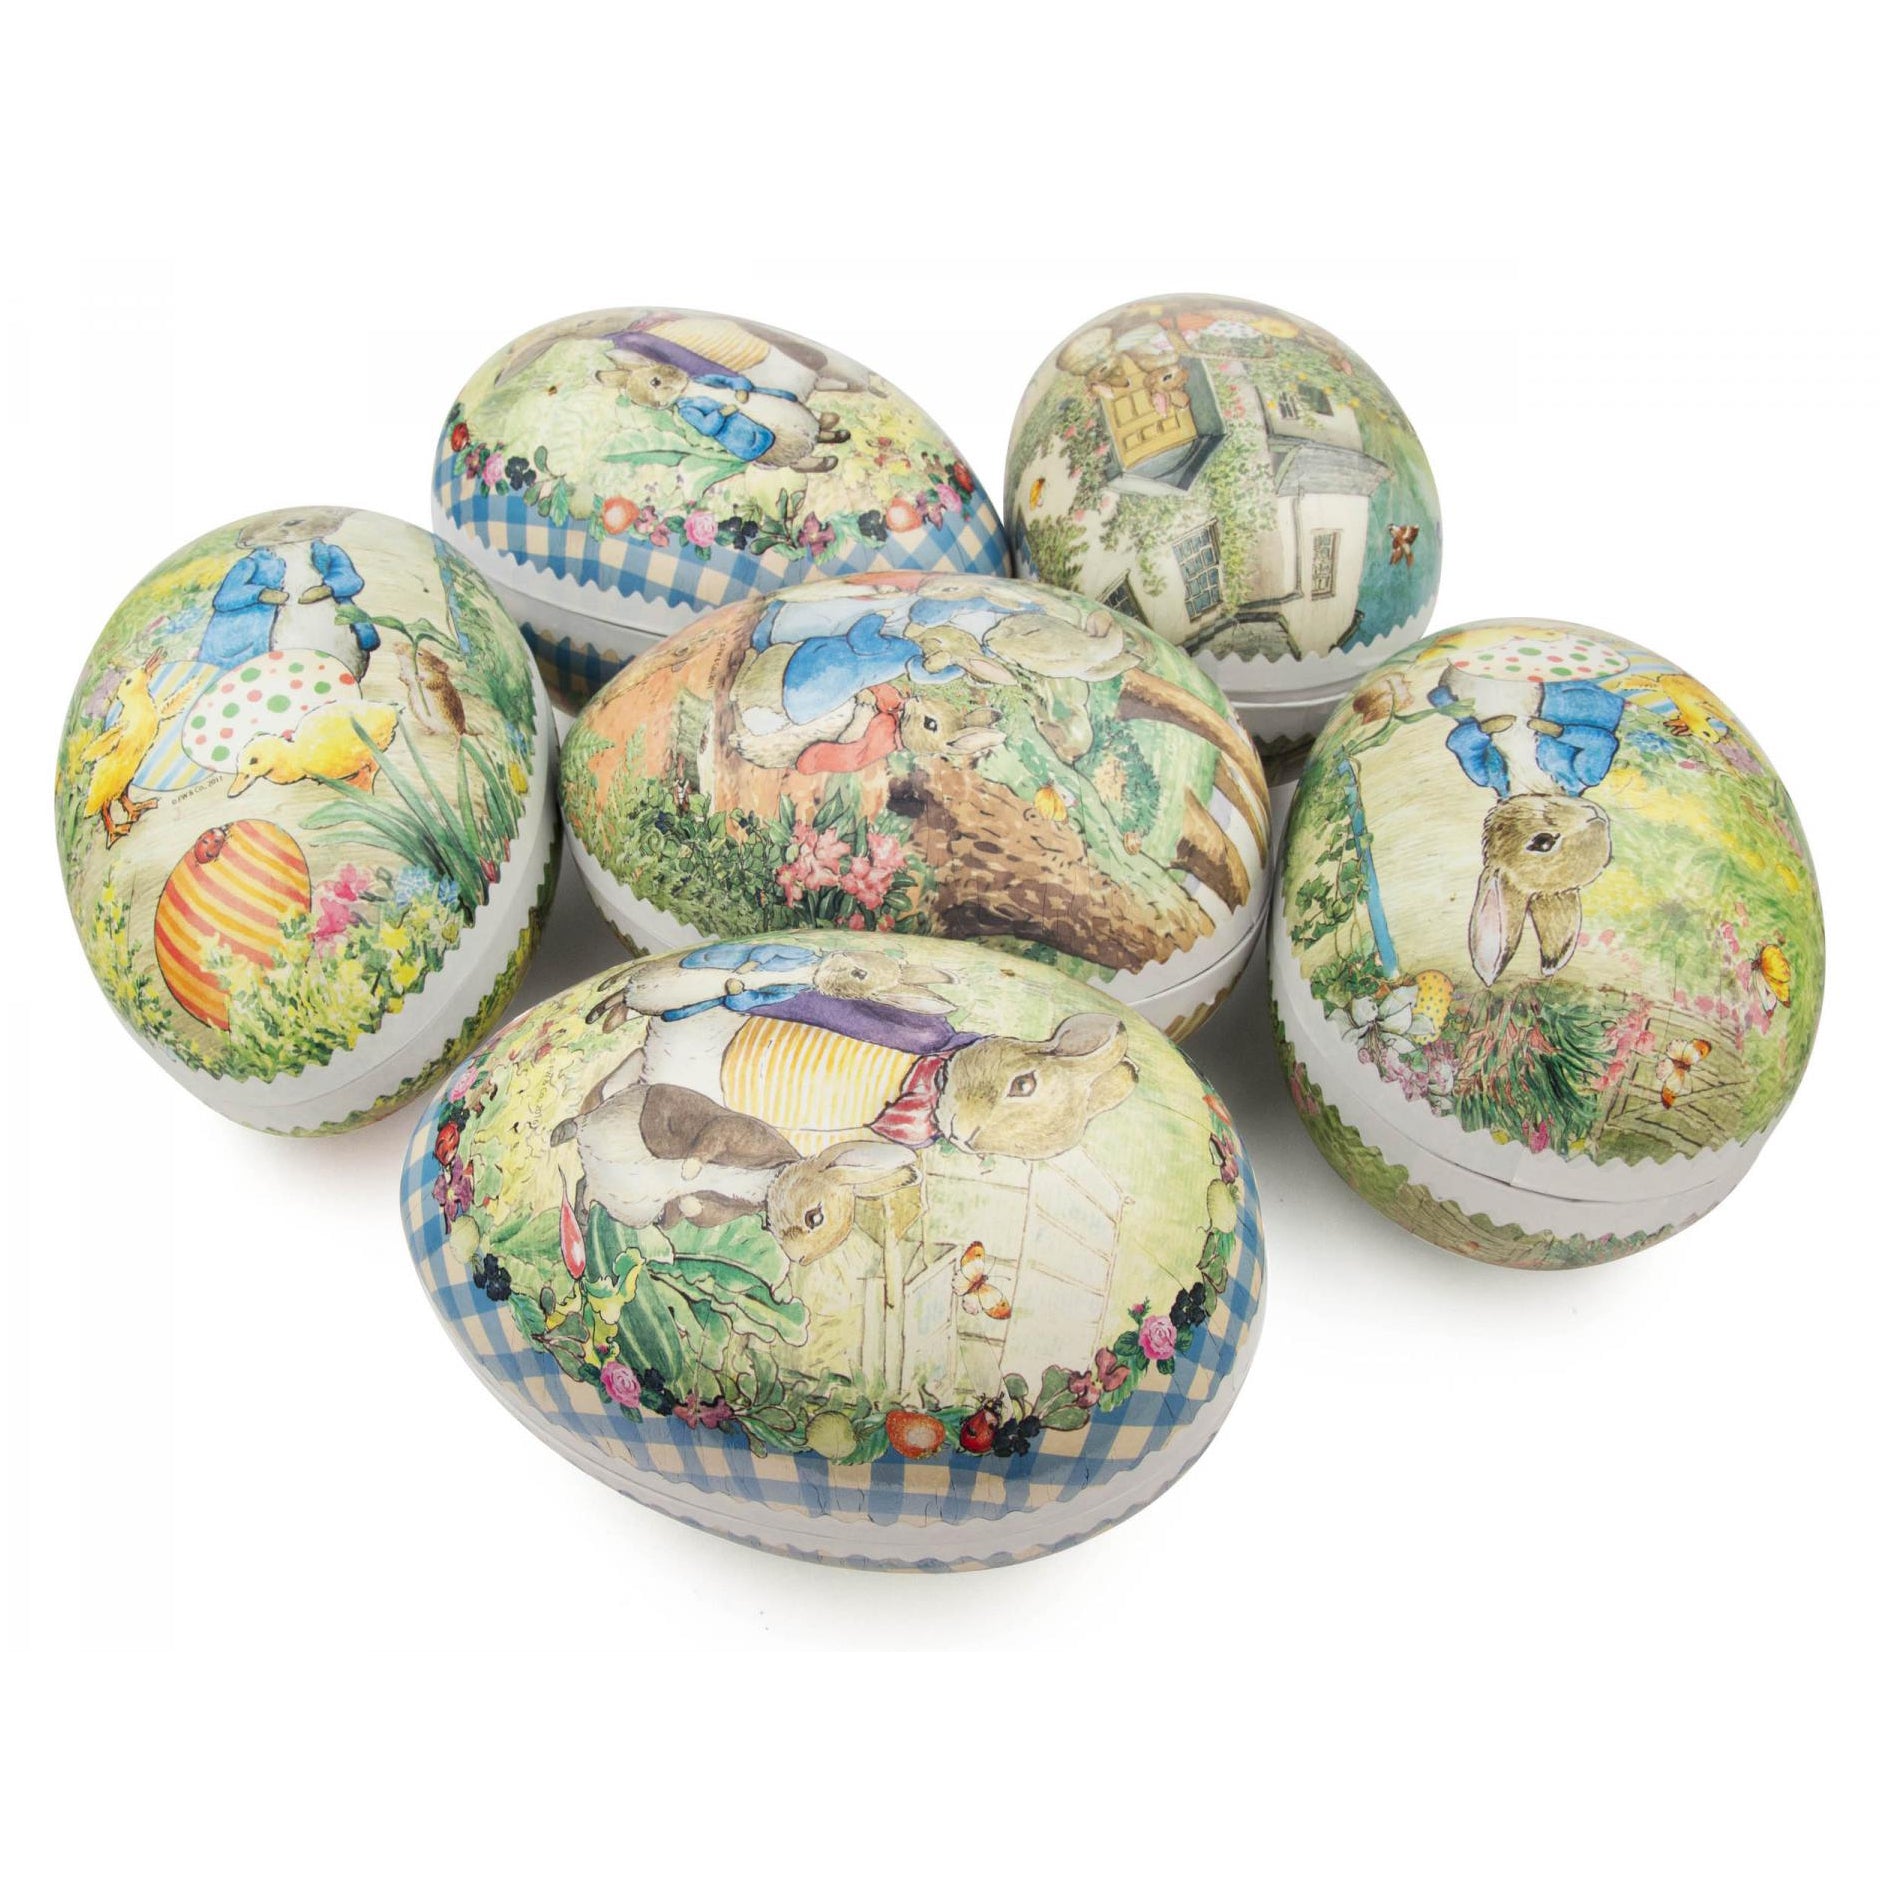 Beatrix Potter Easter Eggs for Filling